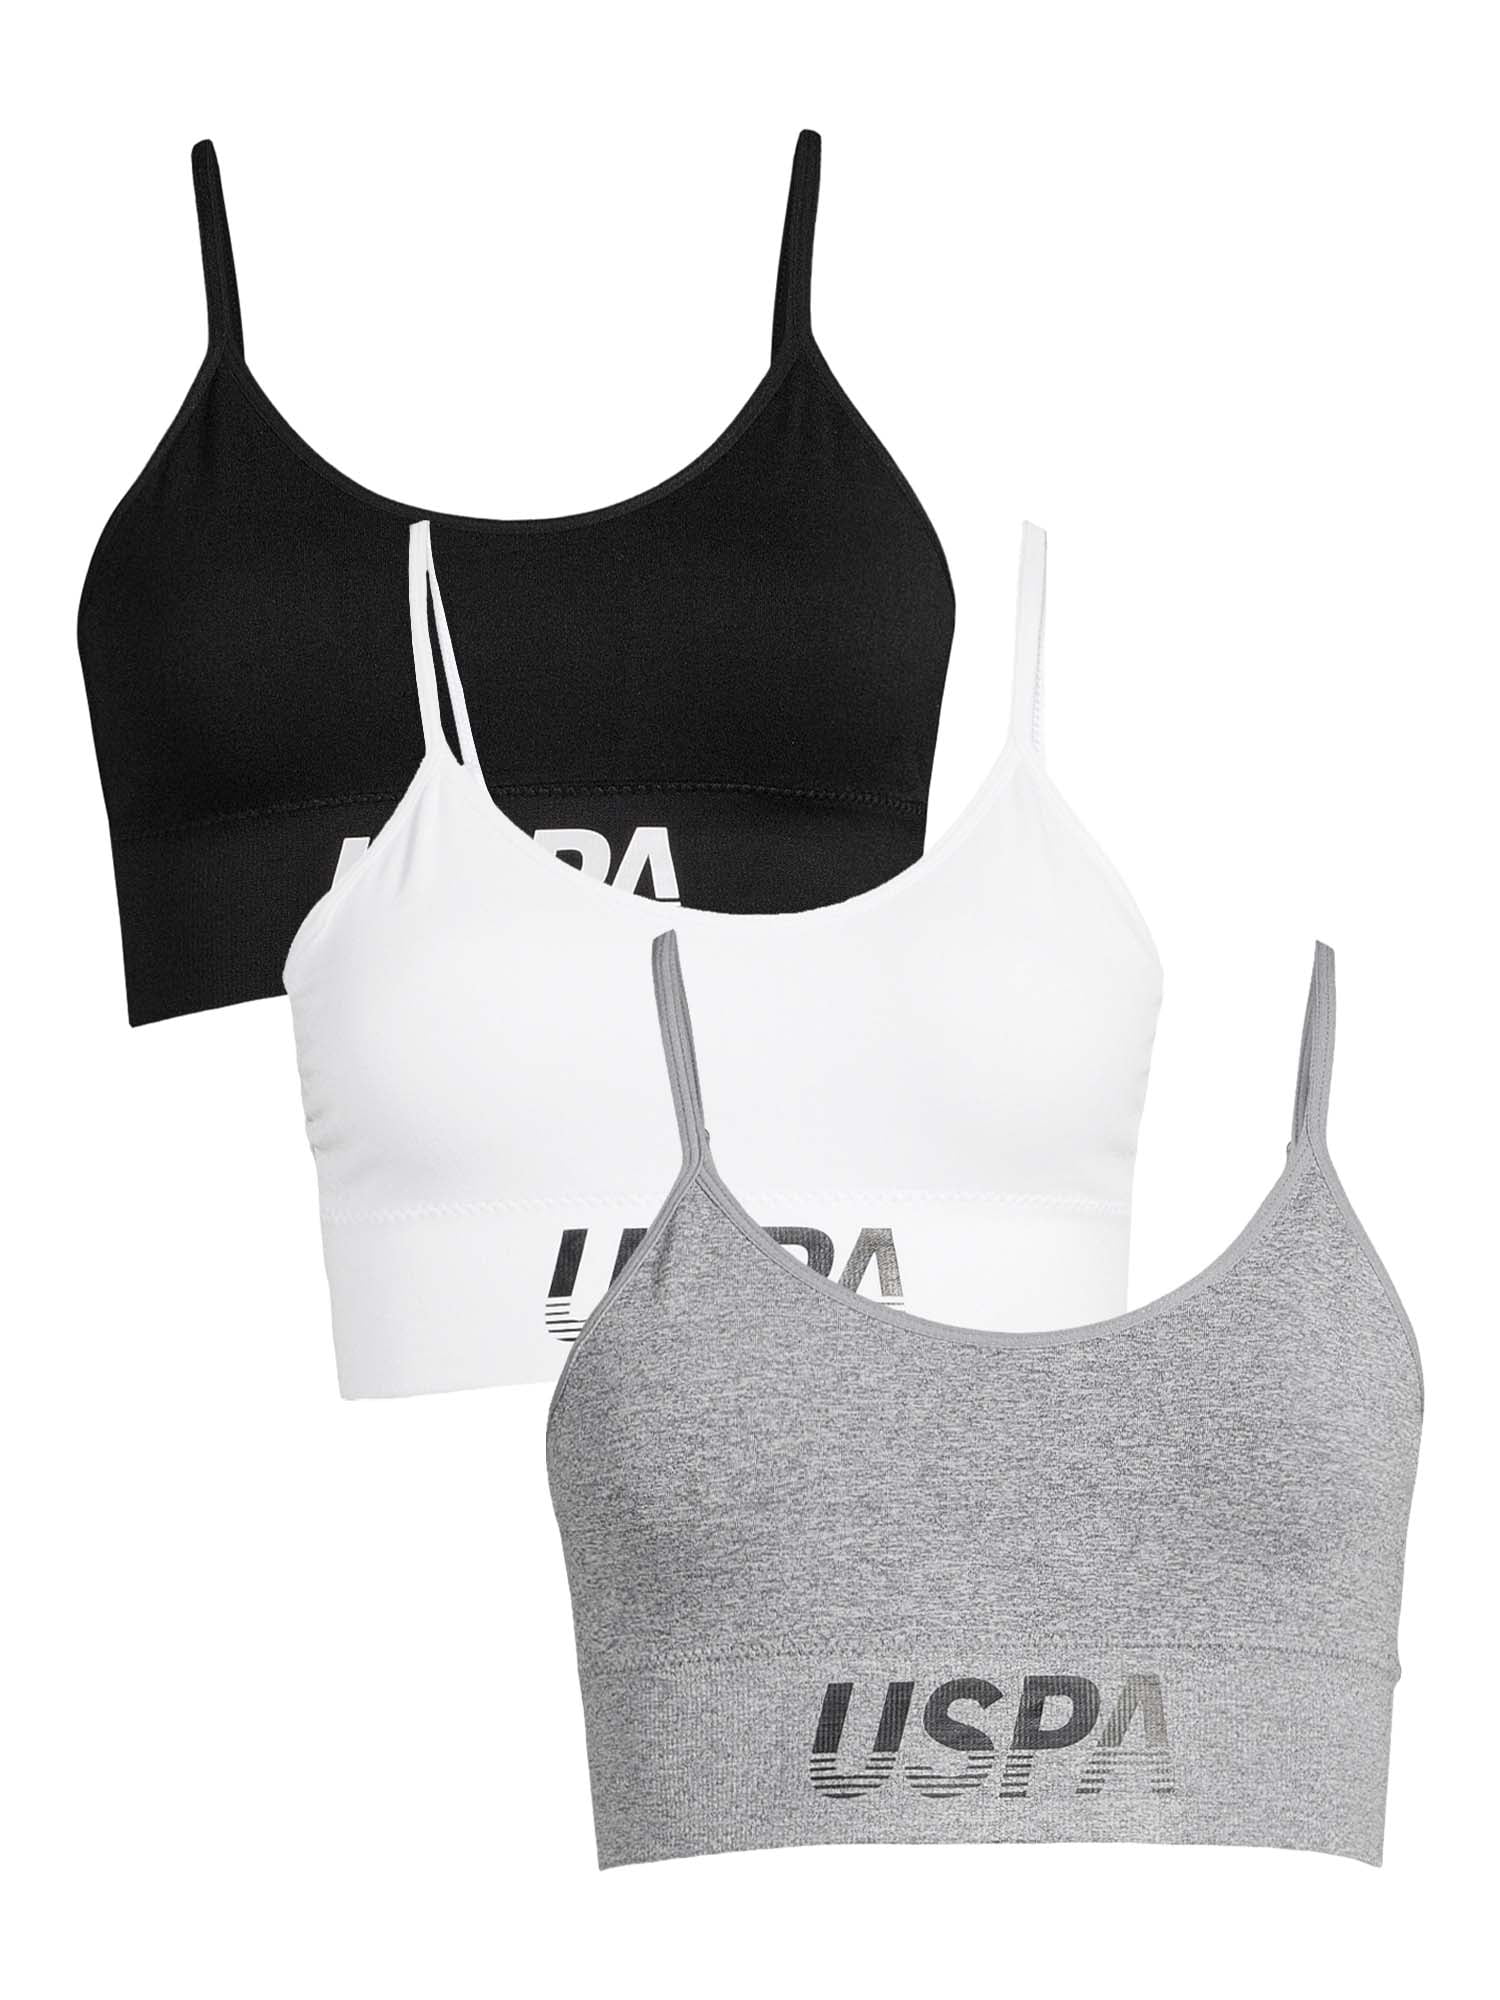 U.S. Polo Assn. Women's Plus Size Tag-Free Seamless Comfort Bras